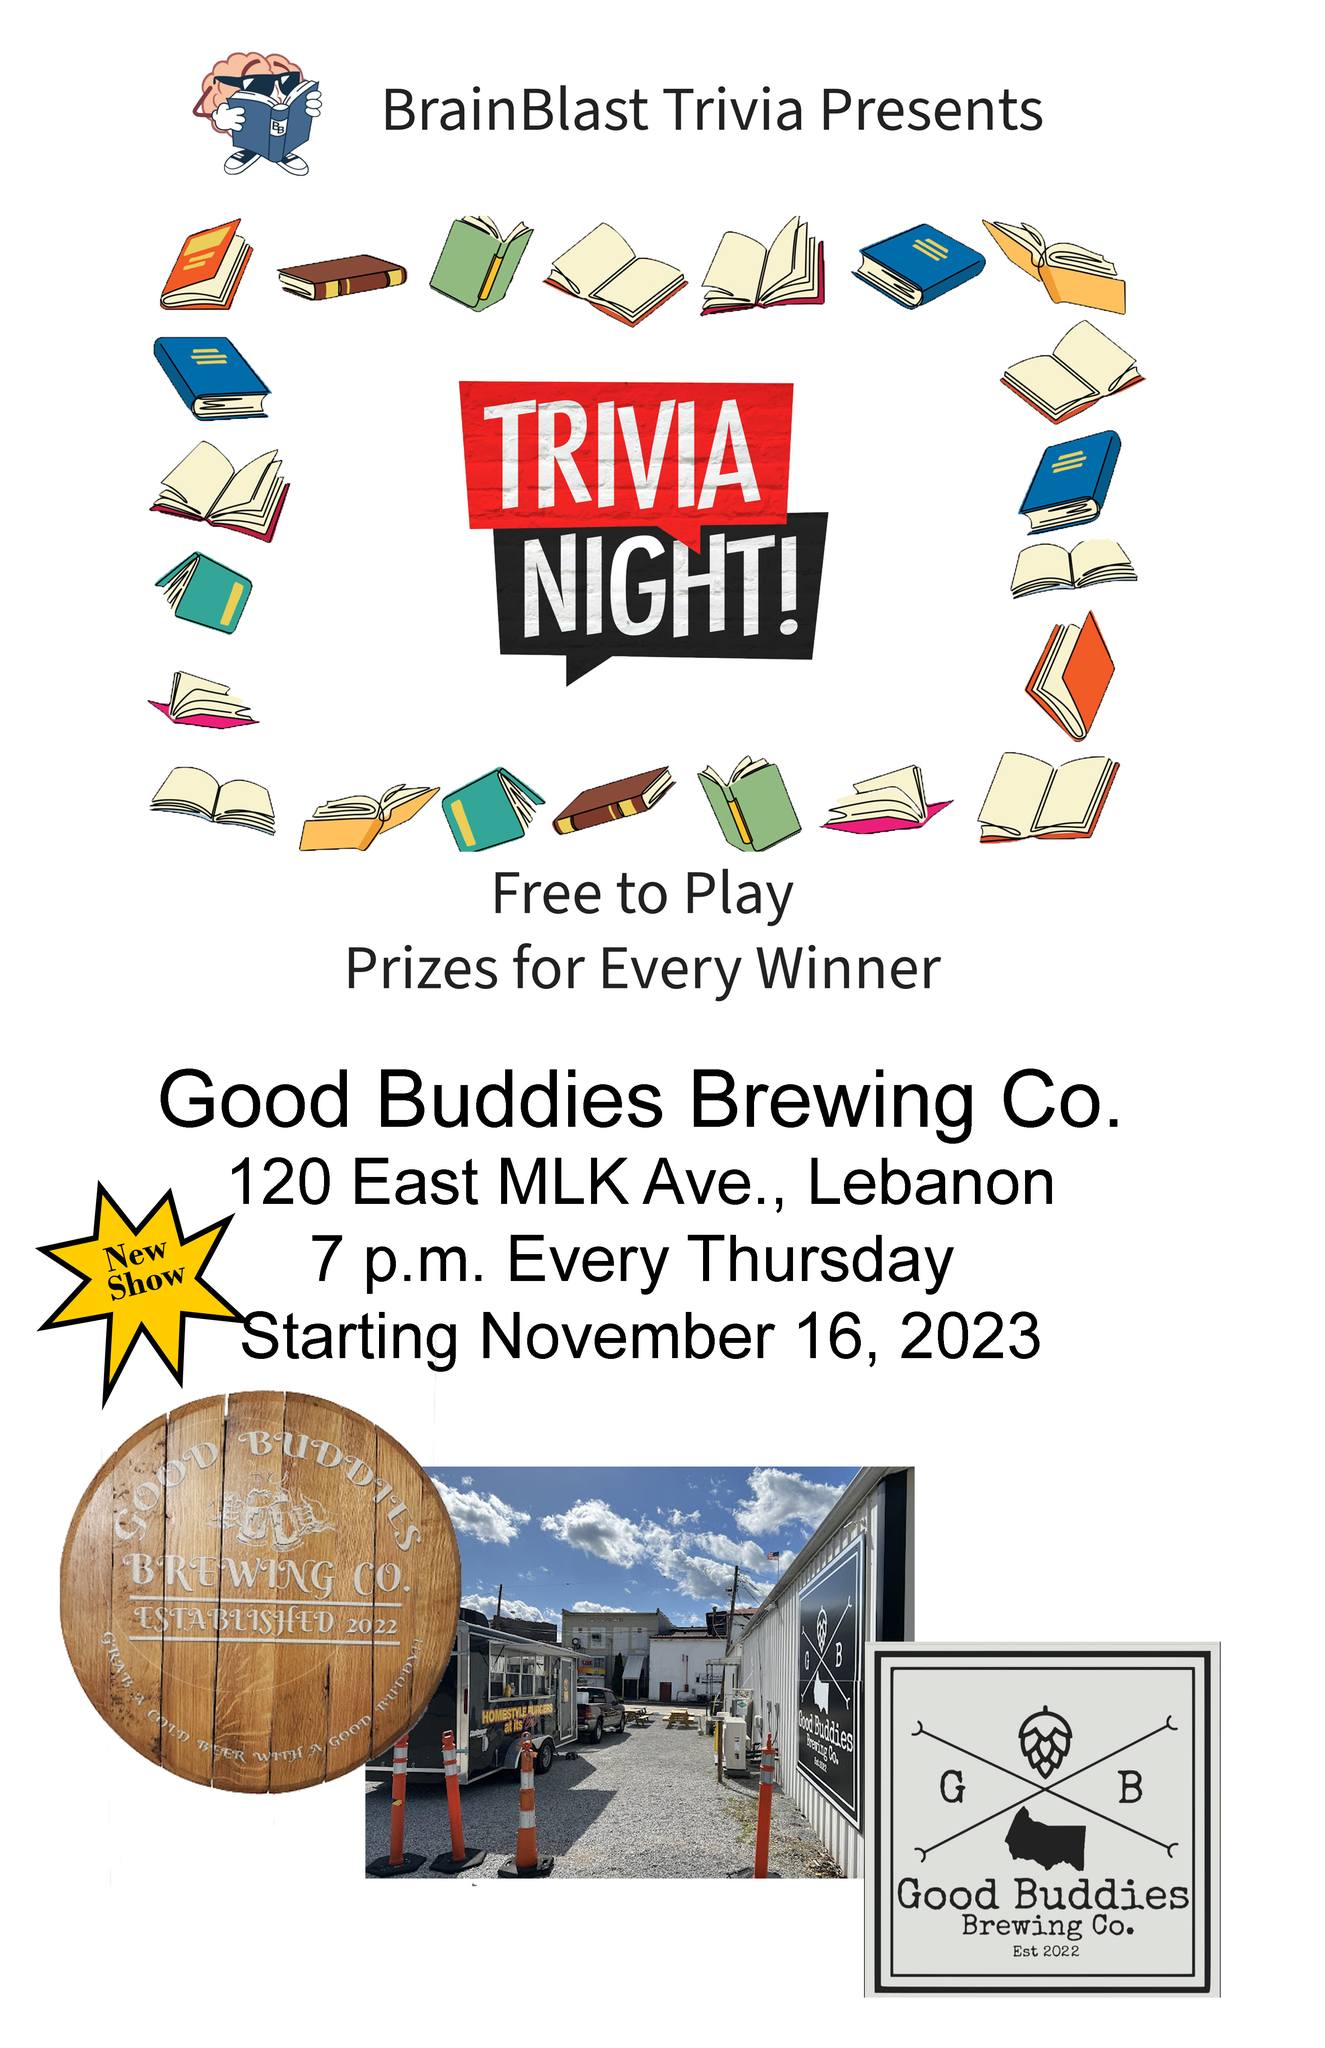 Trivia Night at Good Buddies Brewing Company